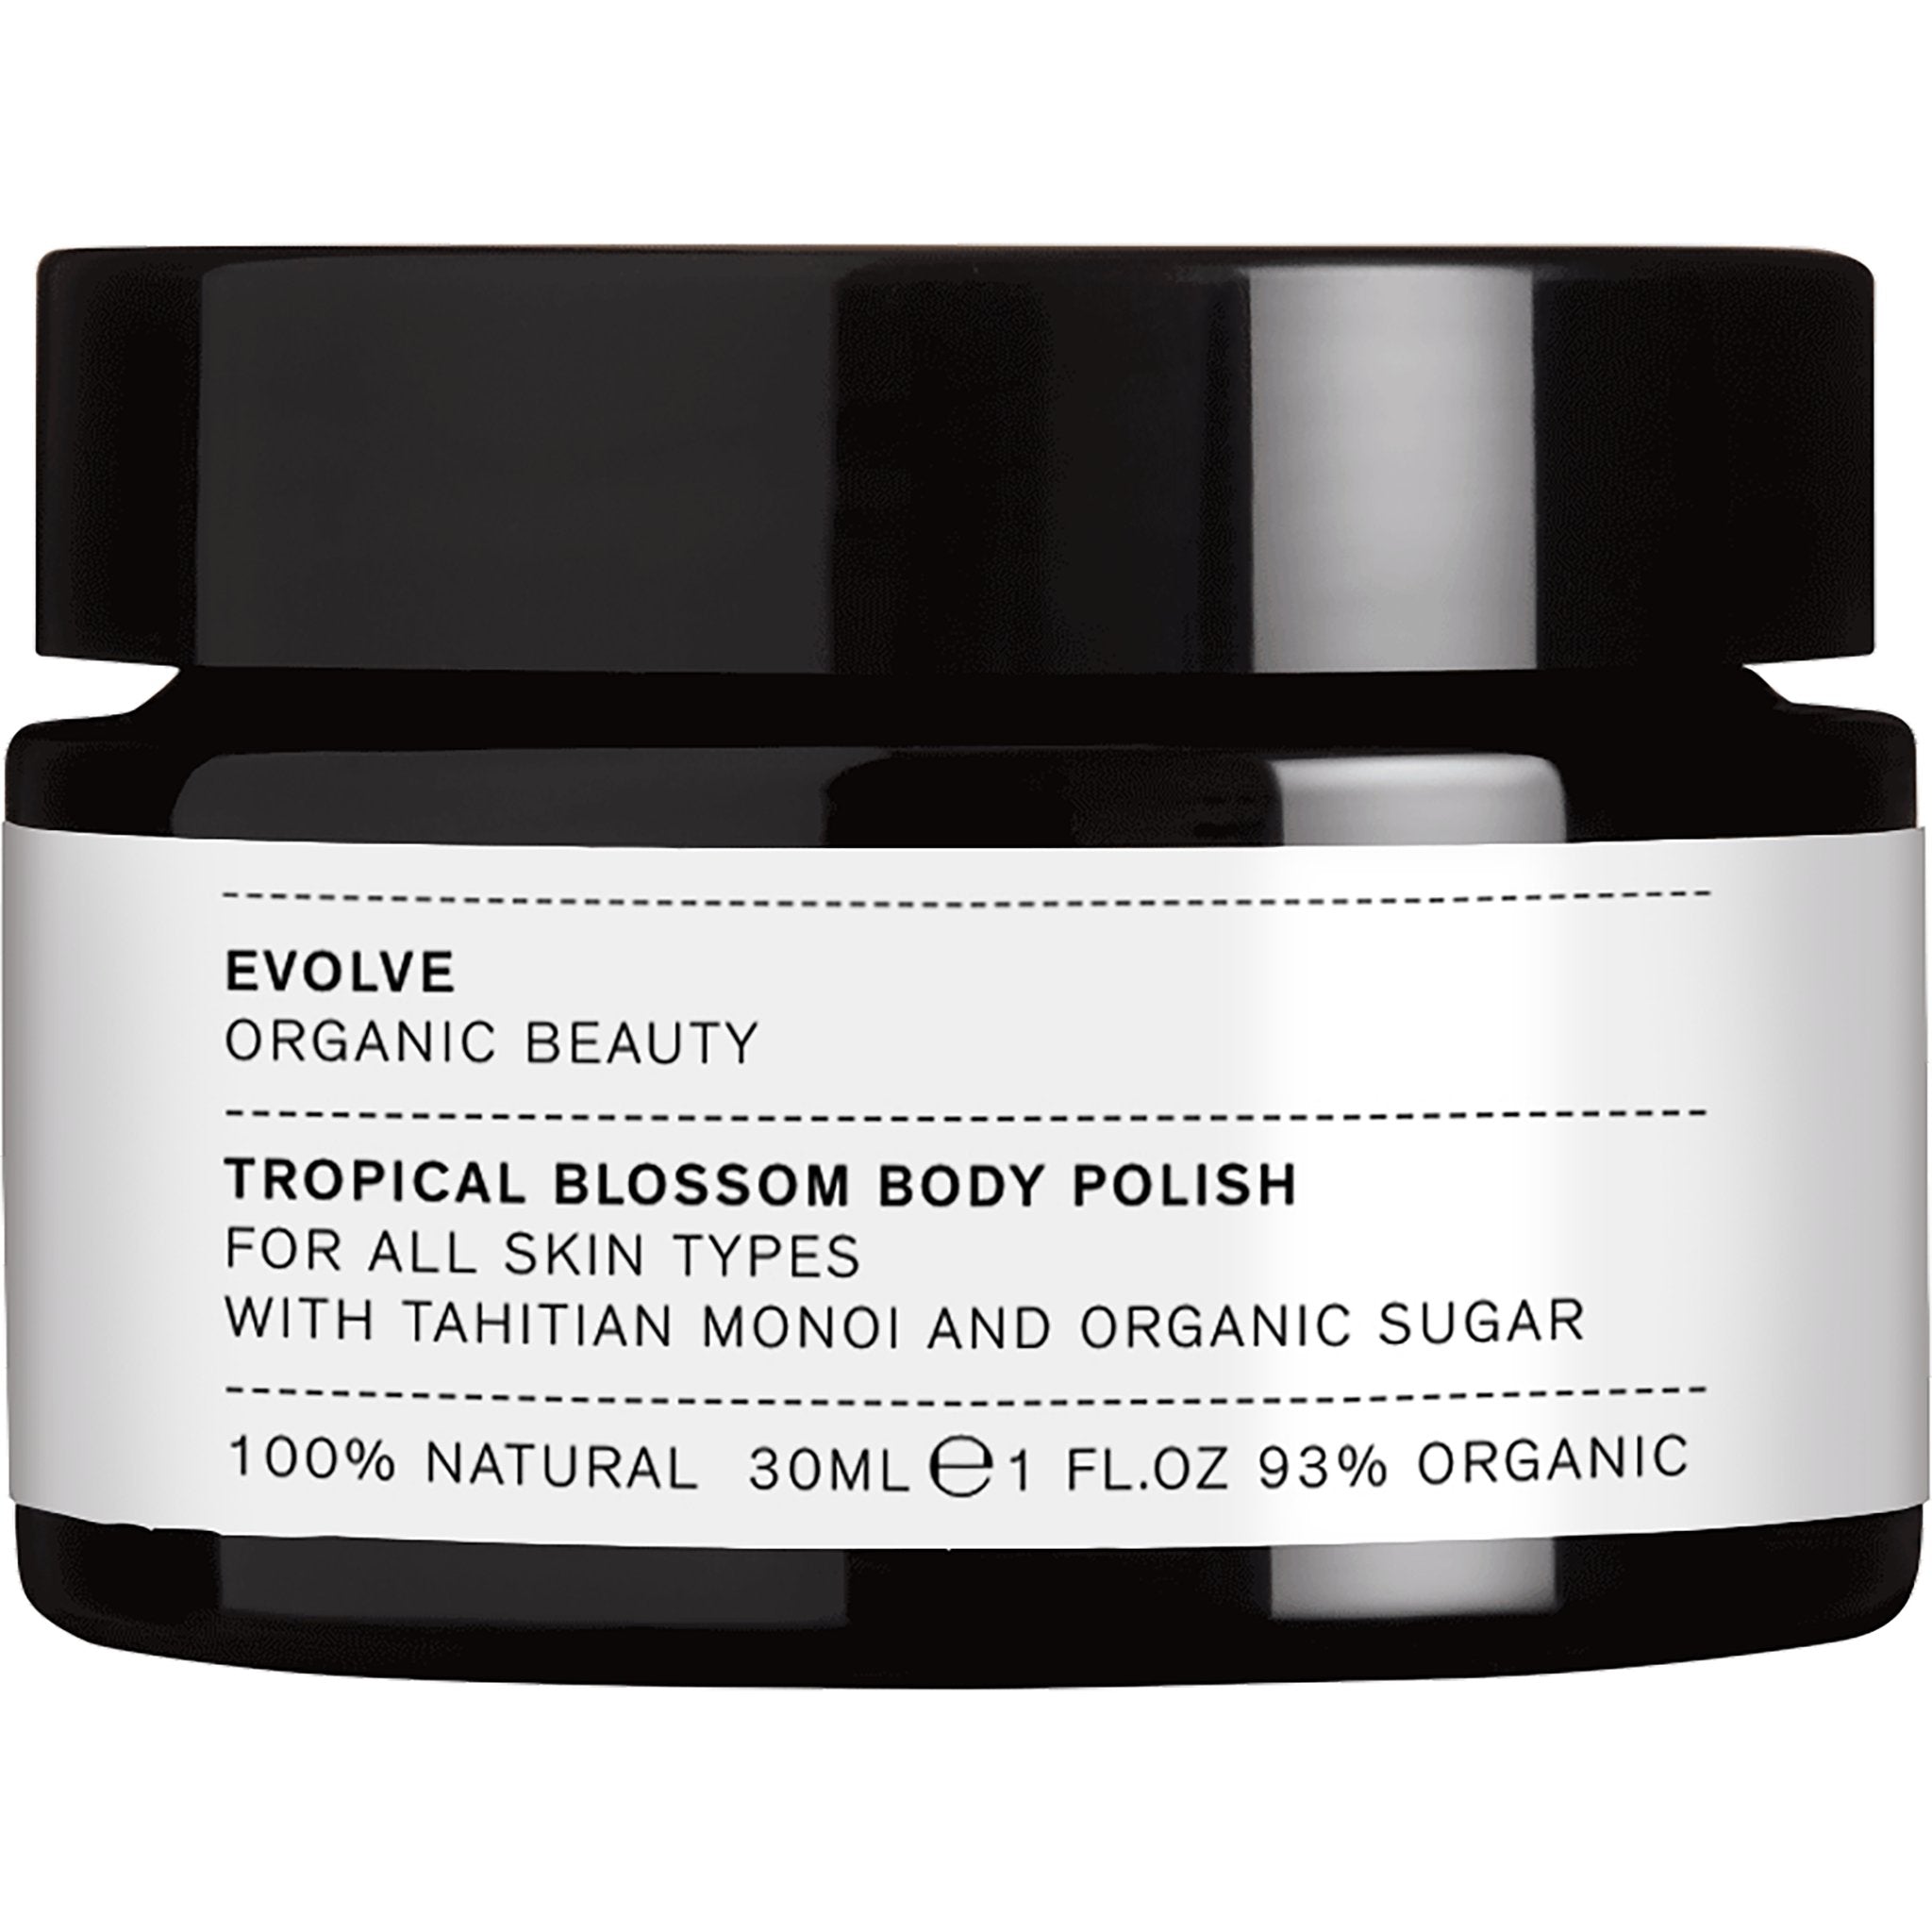 Tropical Blossom Body Polish - mypure.co.uk